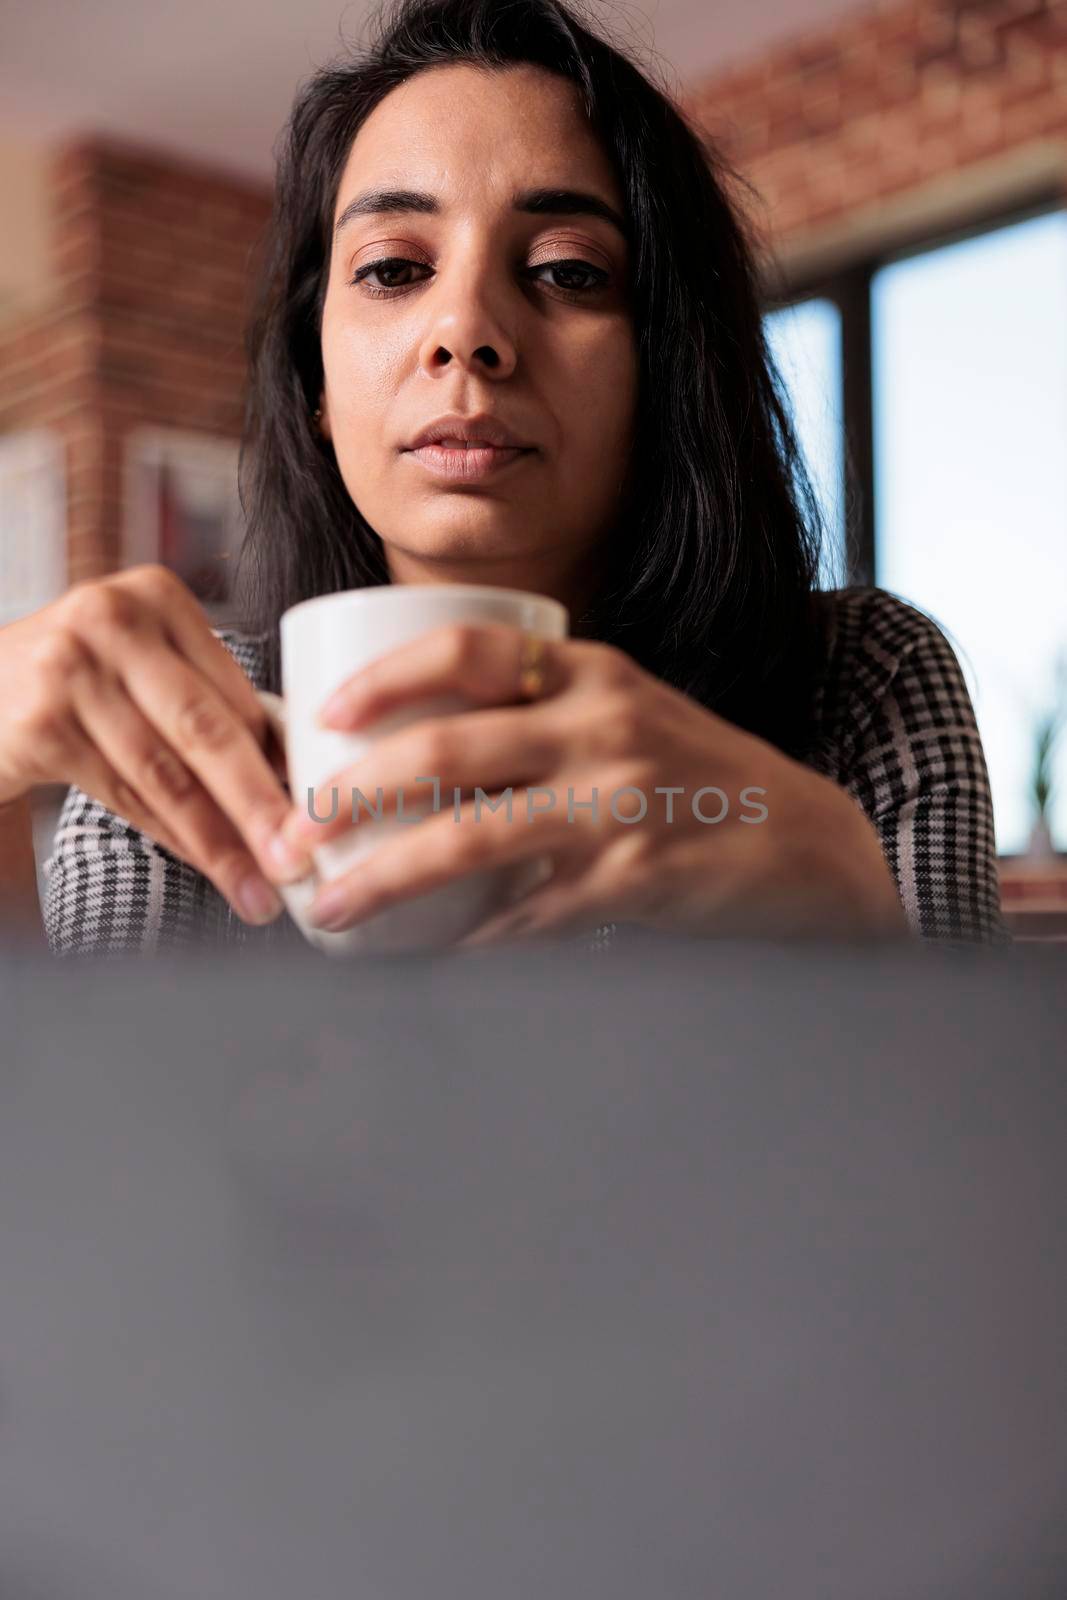 Female freelancer doing remote work on laptop by DCStudio